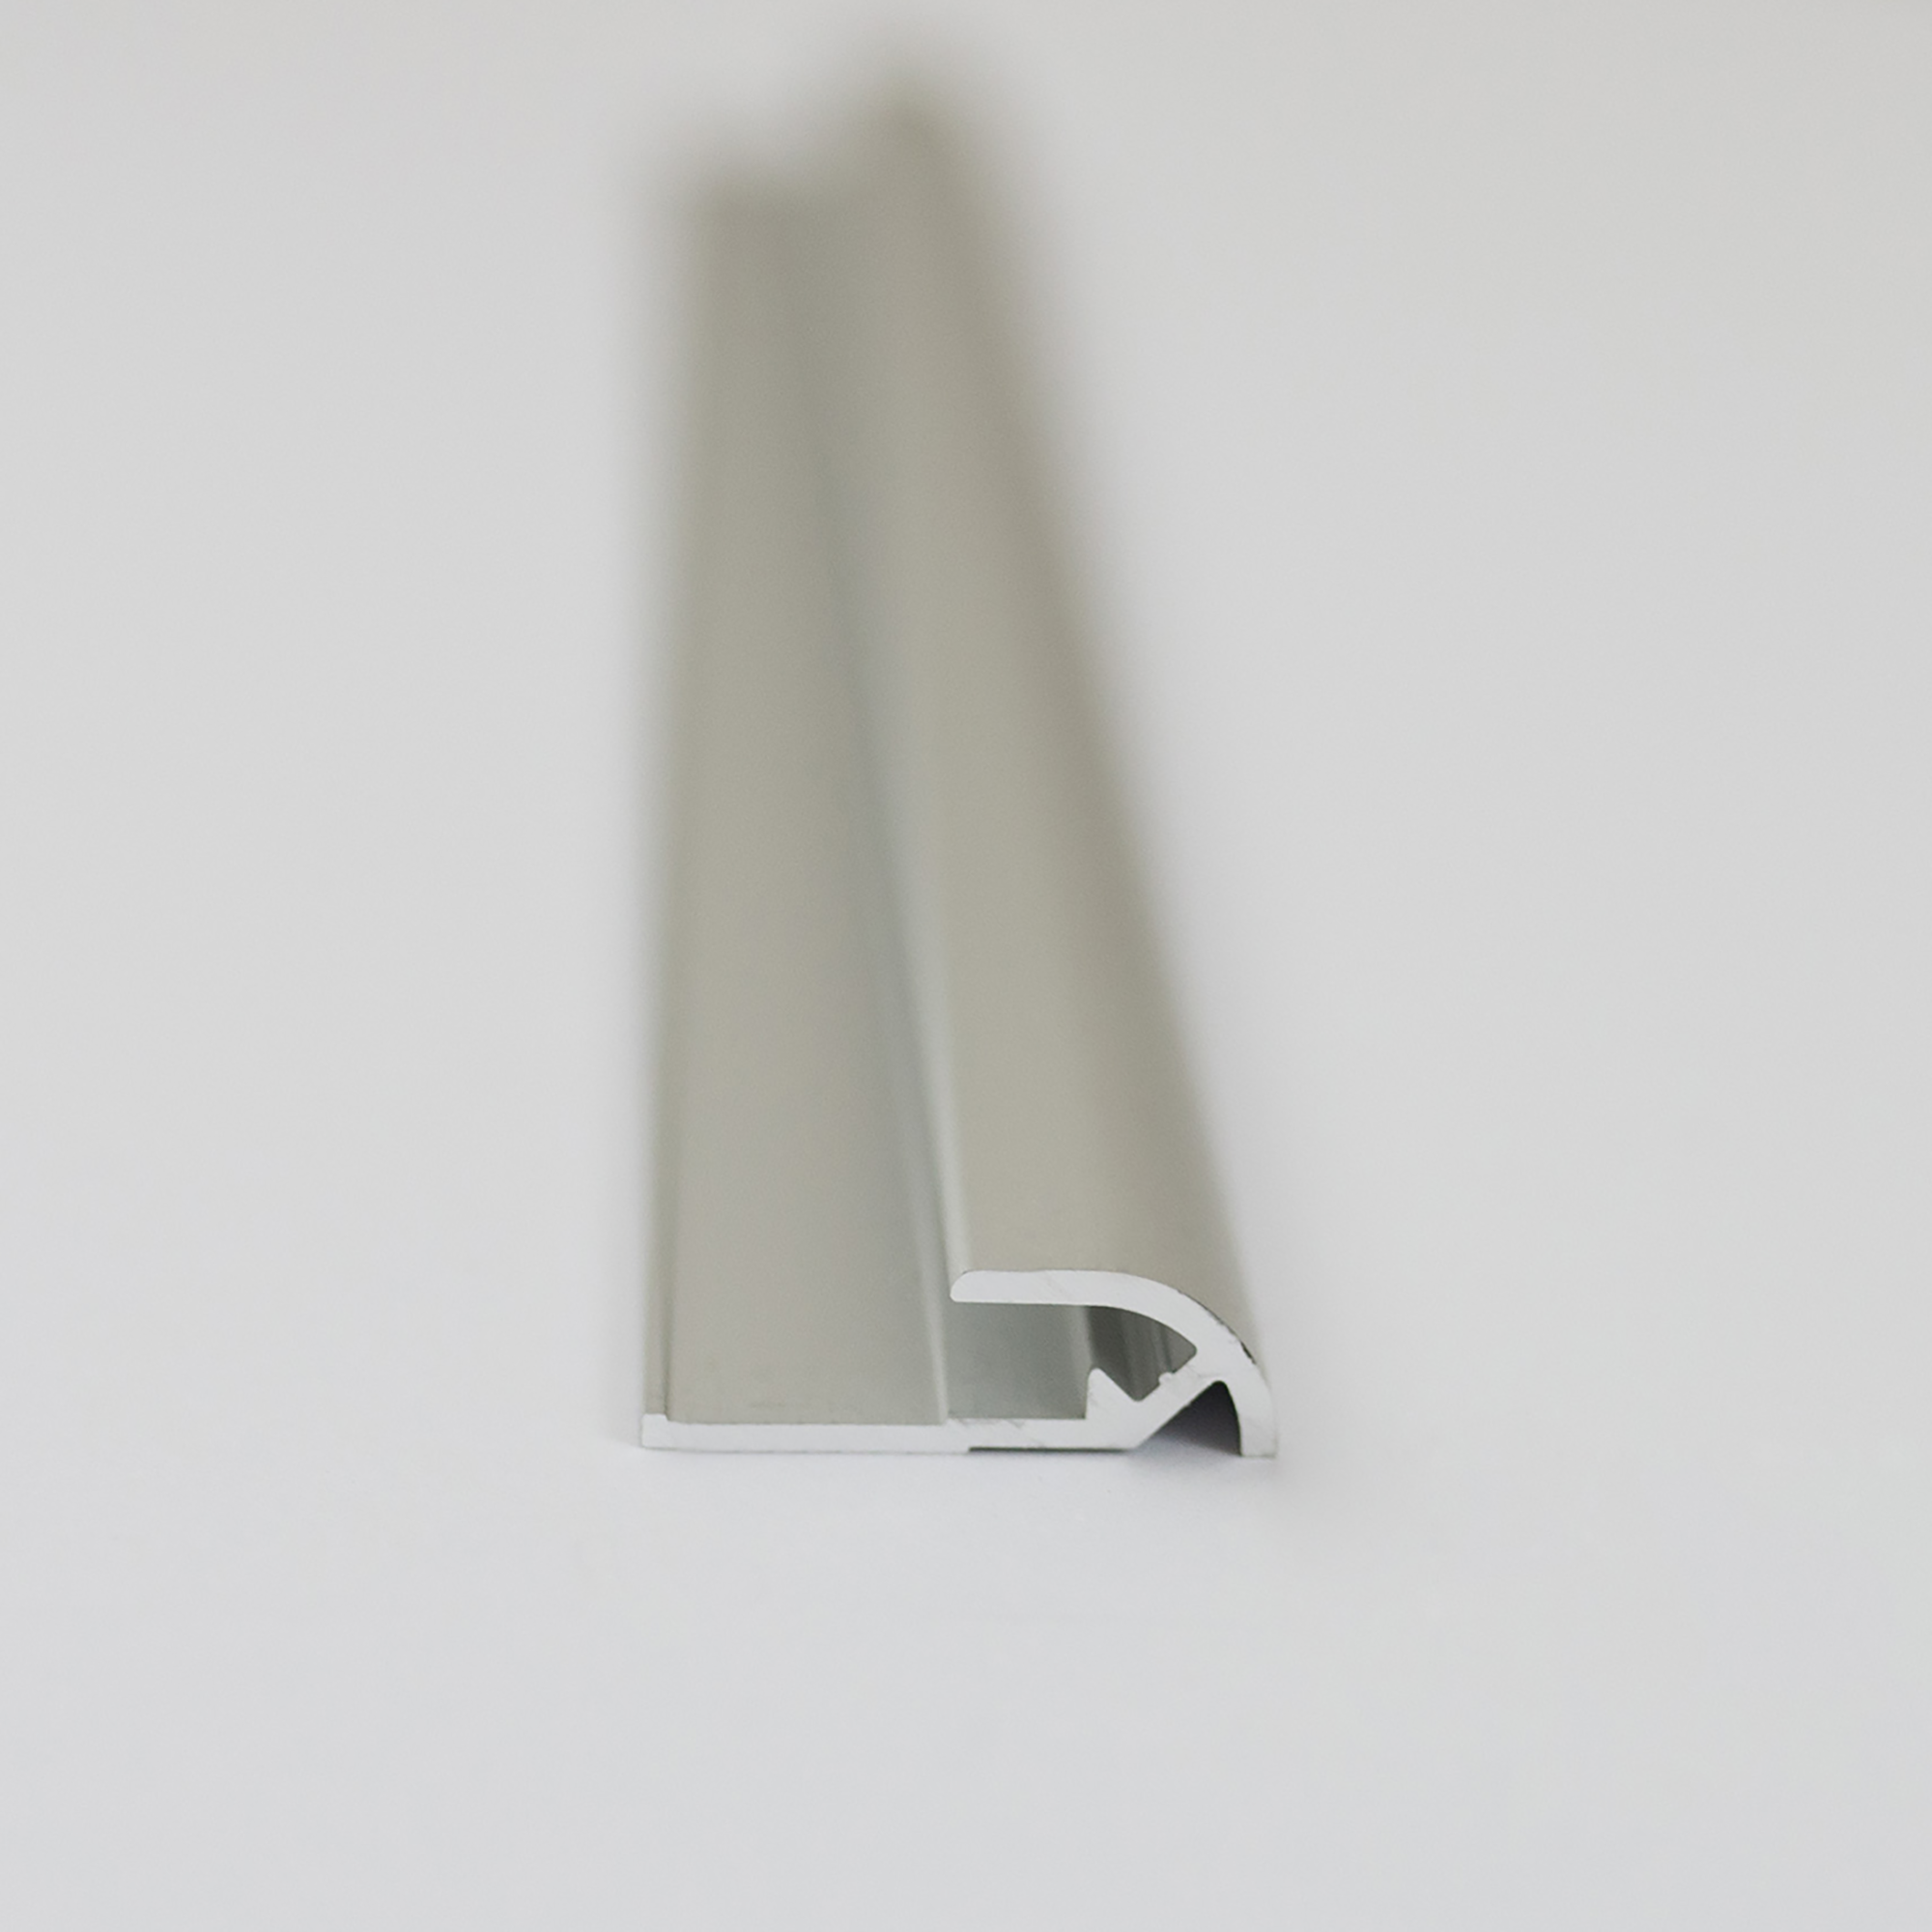 Abschlussprofil für Rückwandplatten, rund, alu silber matt, 2550 mm + product picture